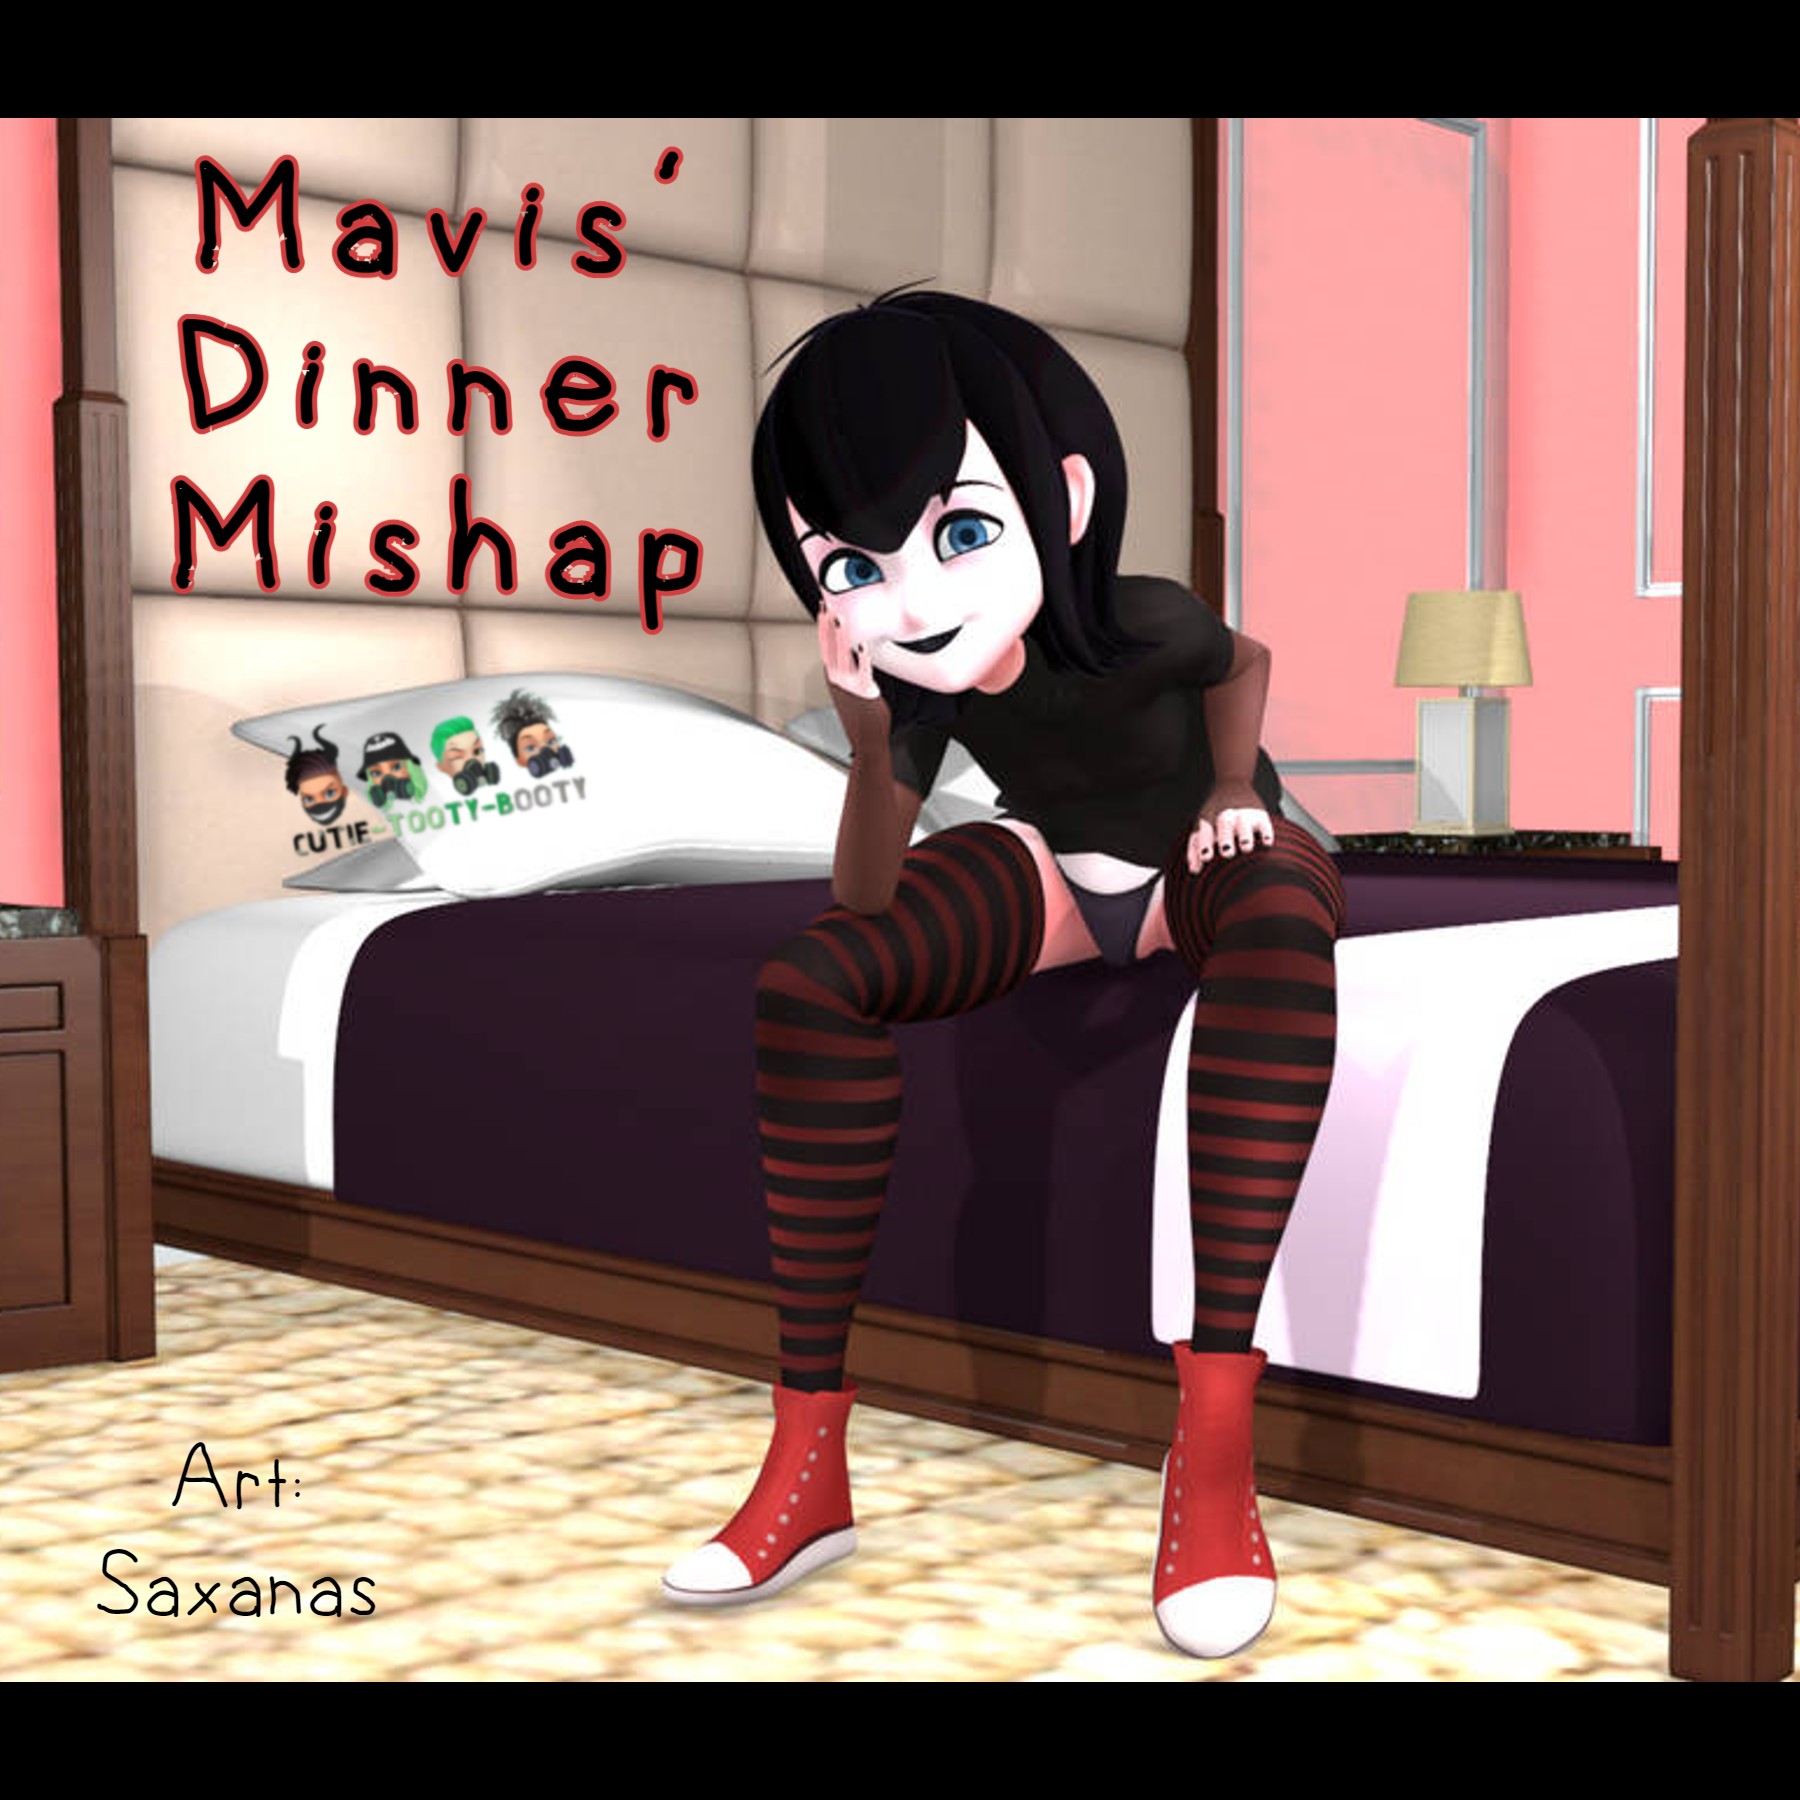 Mavis' Dinner Mishap